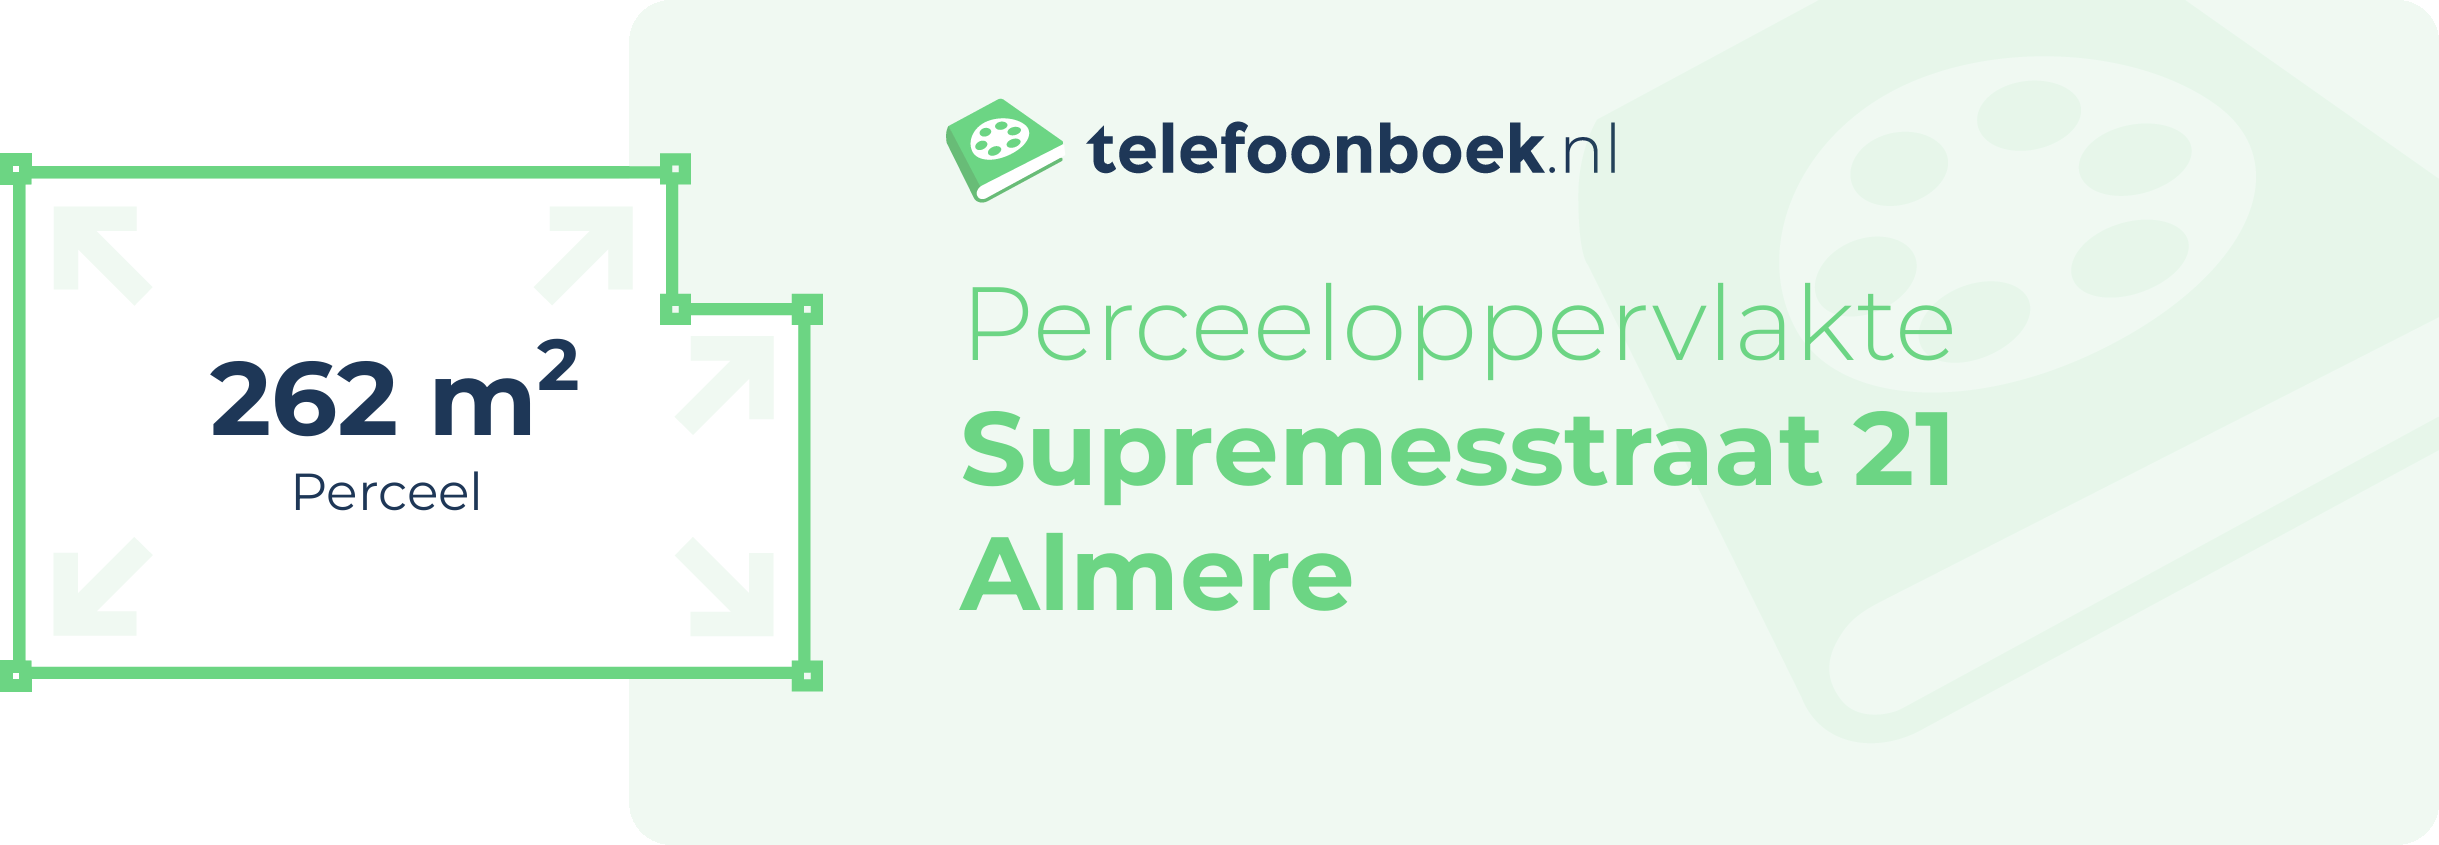 Perceeloppervlakte Supremesstraat 21 Almere